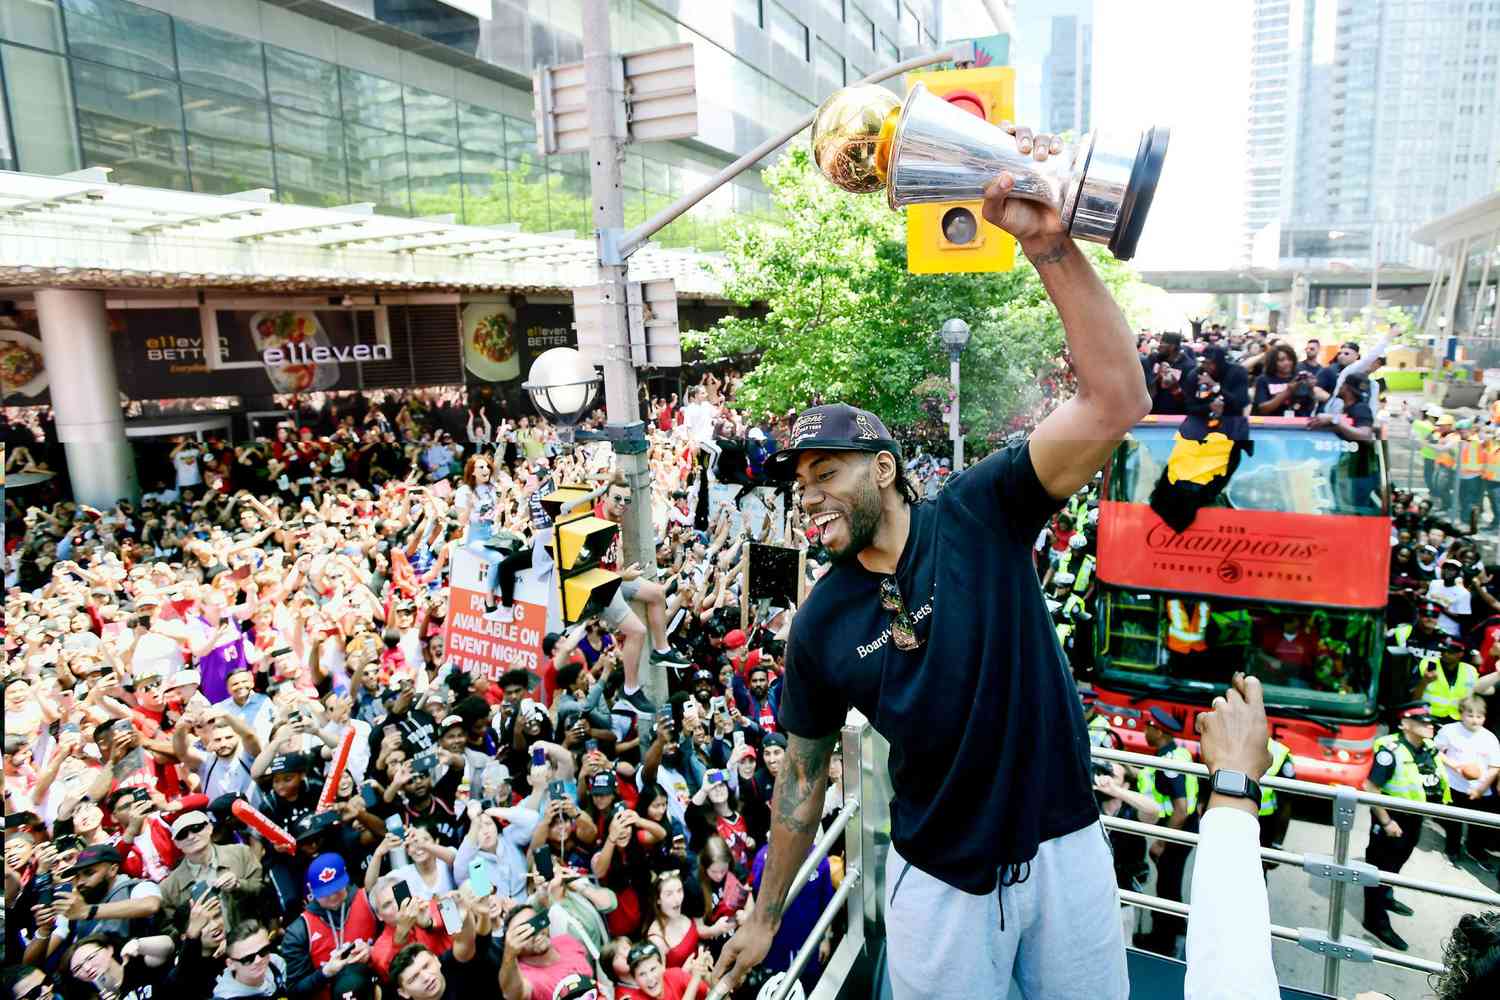 Toronto Raptors forward Kawhi Leonard hoists his playoffs MVP trophy during the NBA basketball championship team's victory parade in Toronto, Monday, June 17, 2019